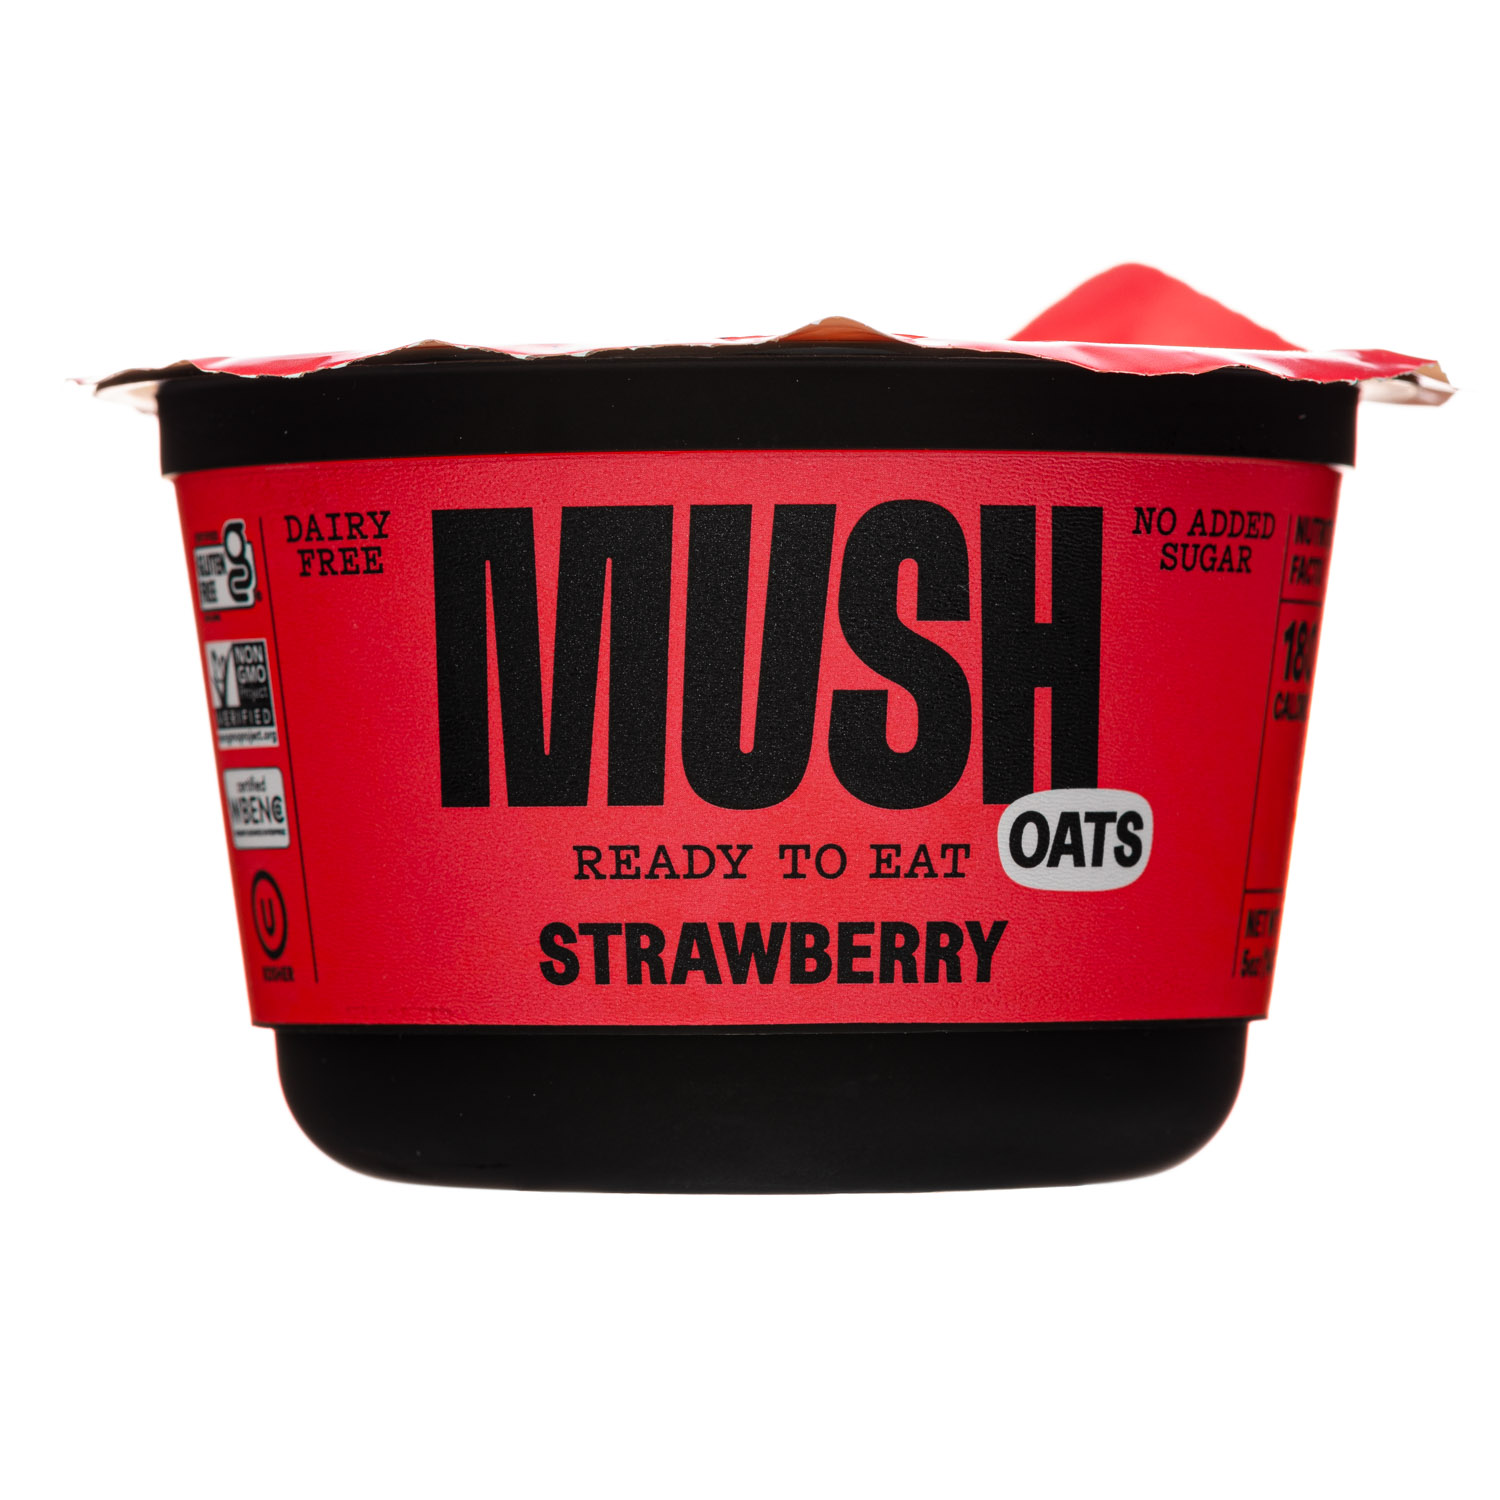 https://images.nosh.com/brands/446023449.mush-cup-2022-oats-strawb.jpg